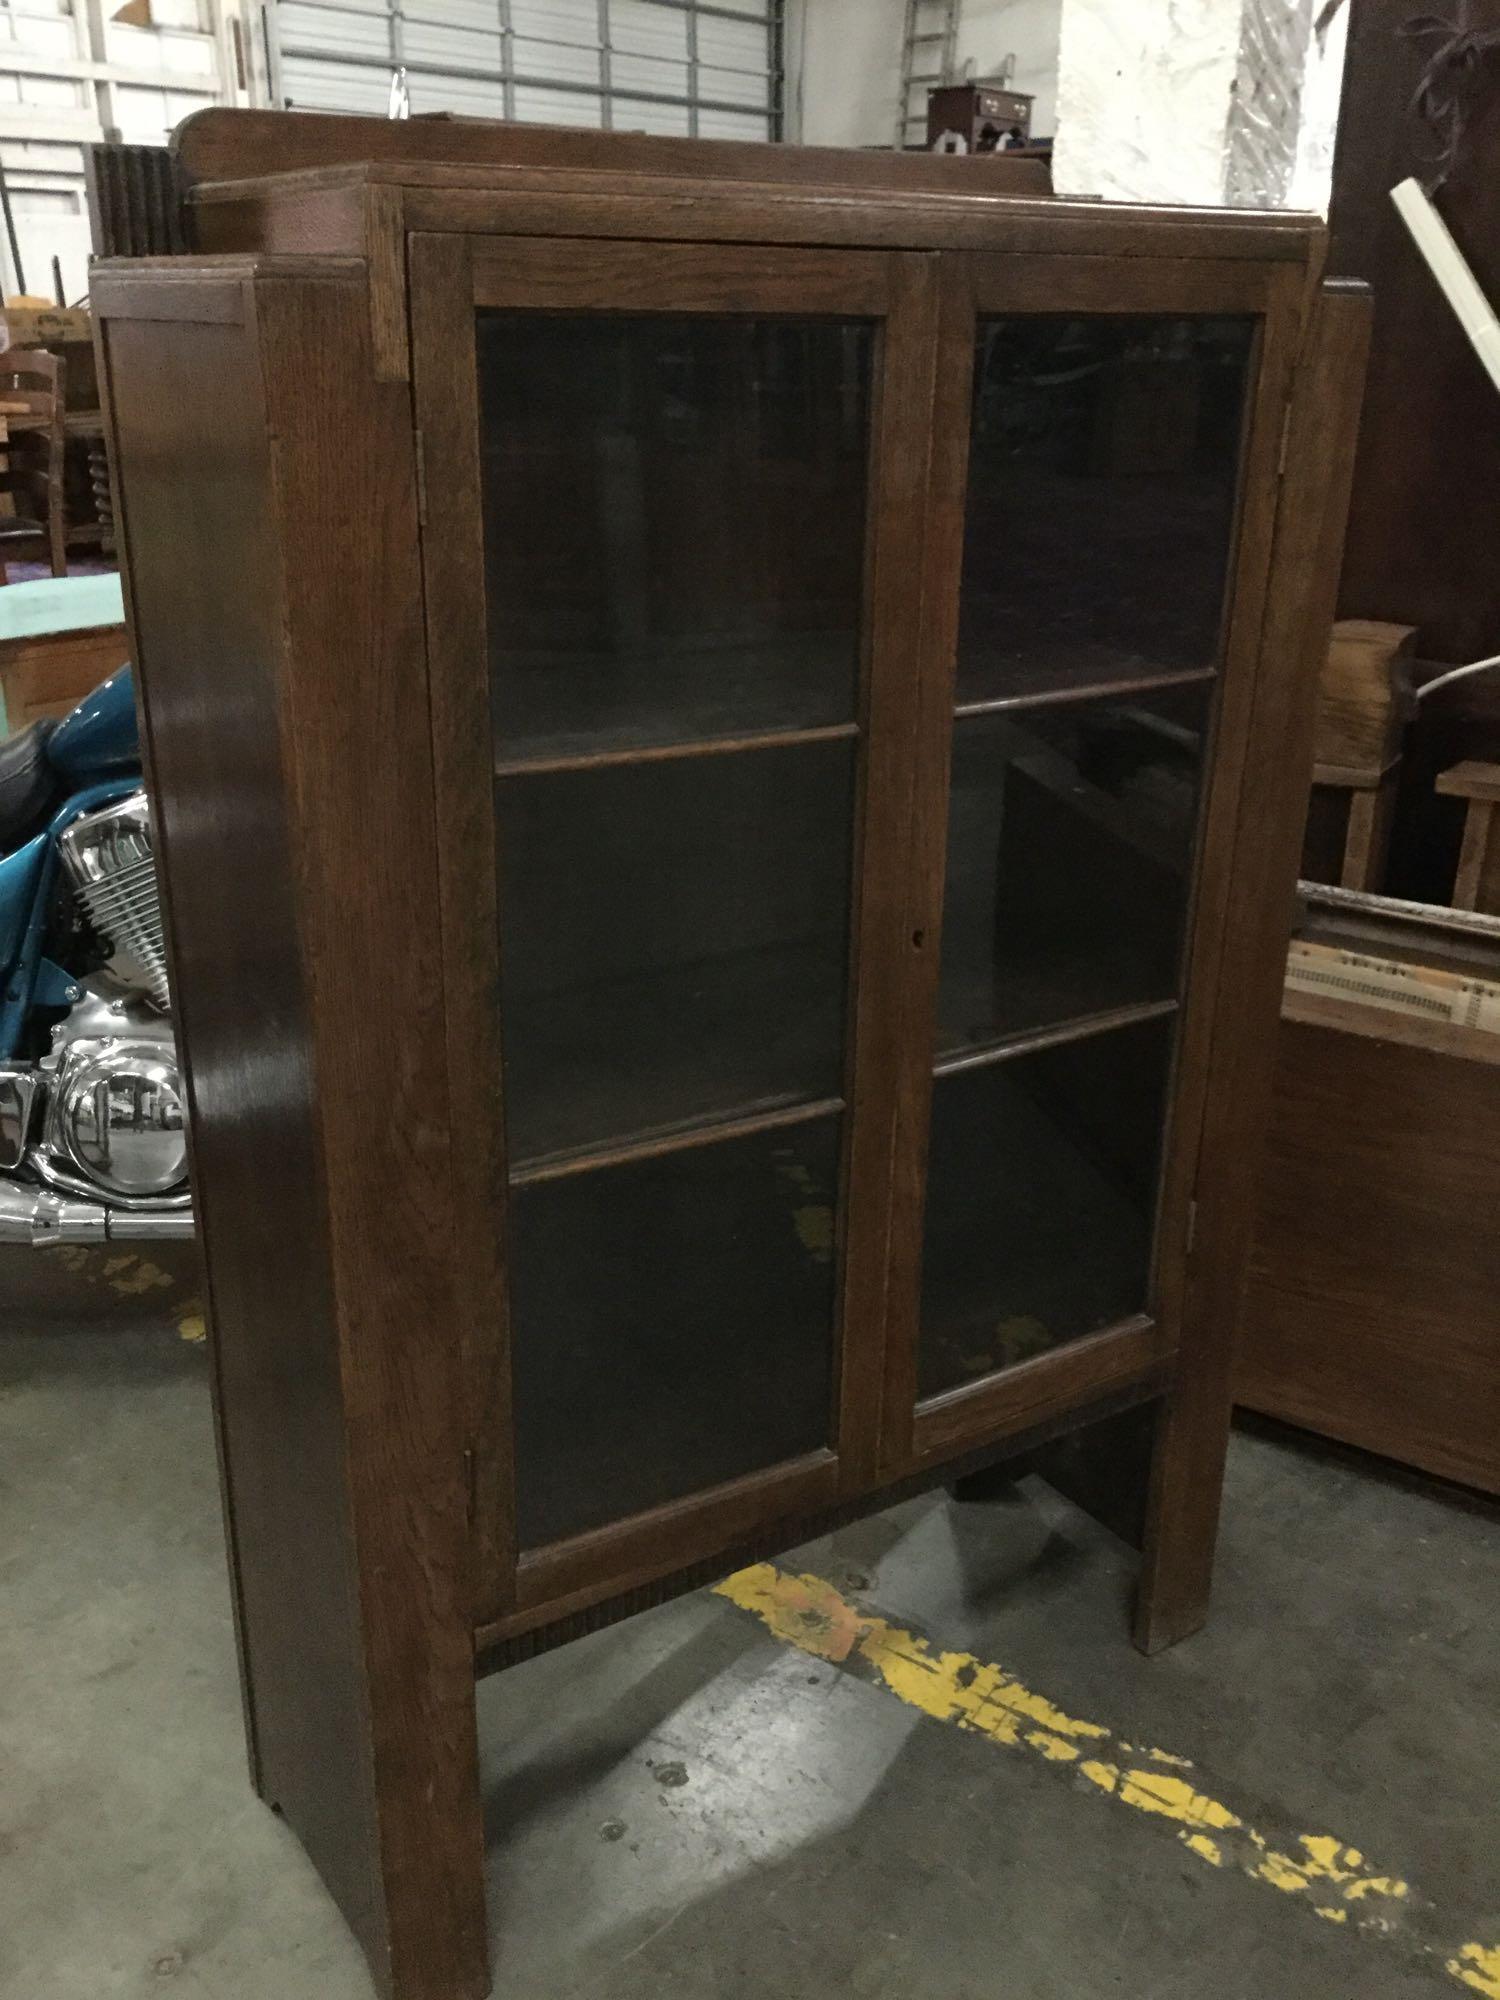 Antique thick mission style oak 3 tier glass front bookshelf / cabinet